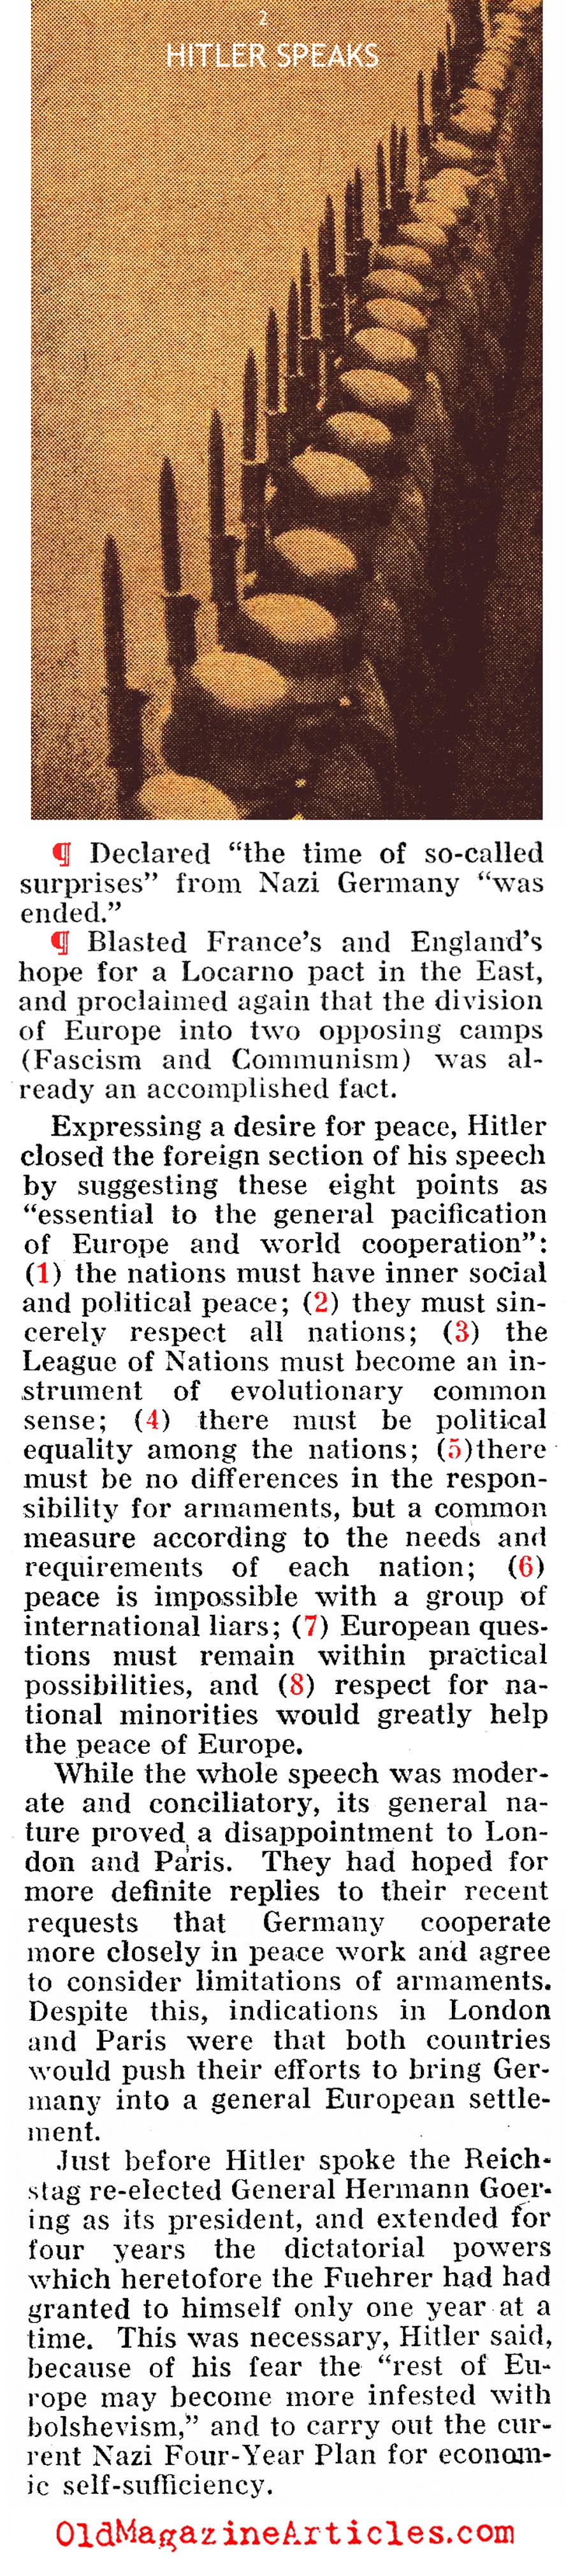 Hitler's Earlies Years In Power (Pathfinder Magazine, 1937)